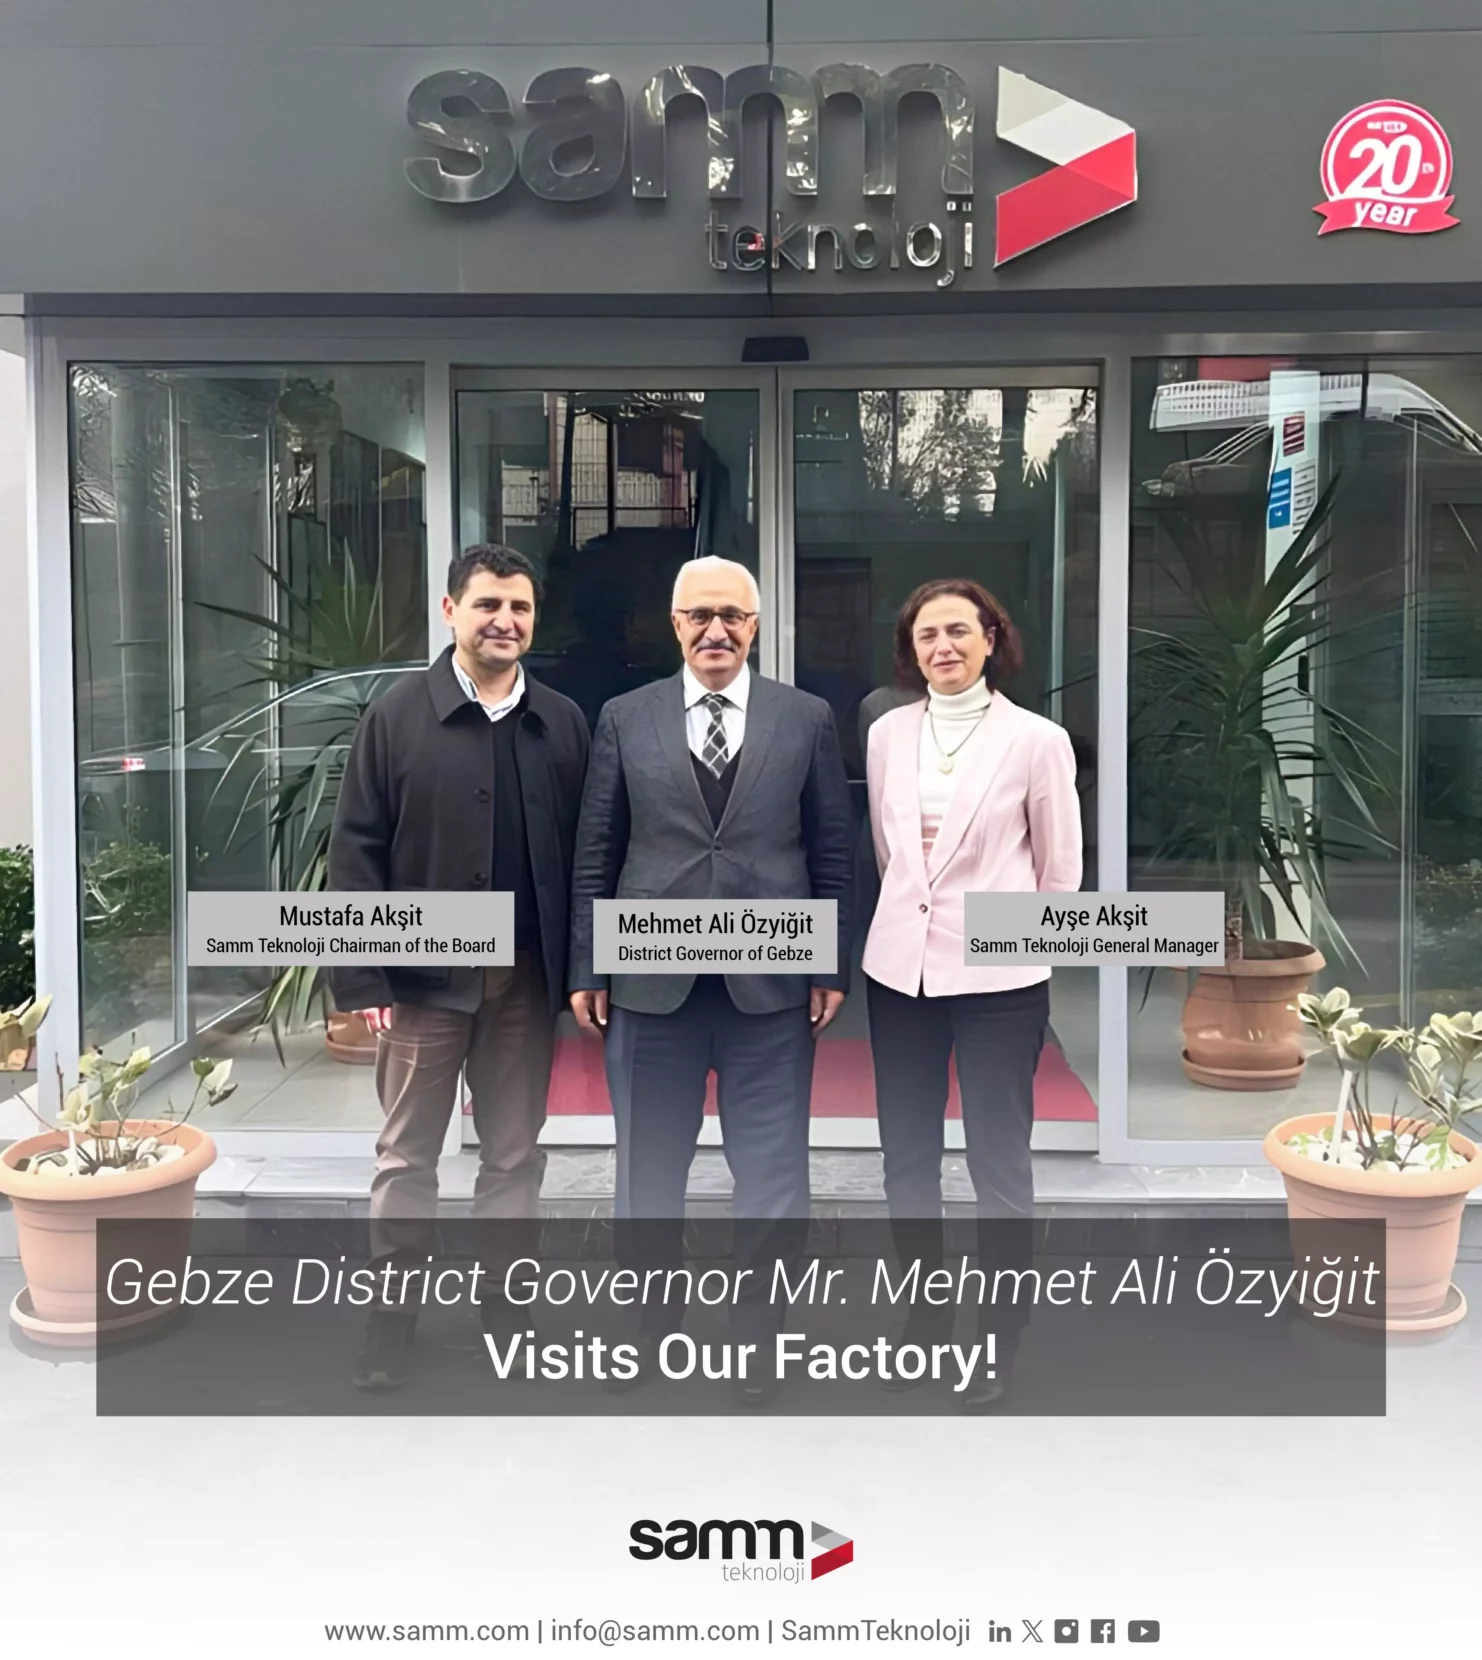 Mustafa Akşit, Mehmet Ali Özyiğit, Ayşe Akşit, Gebze District Governor Mr. Mehmet Ali Özyiğit Visited Samm Teknoloji!